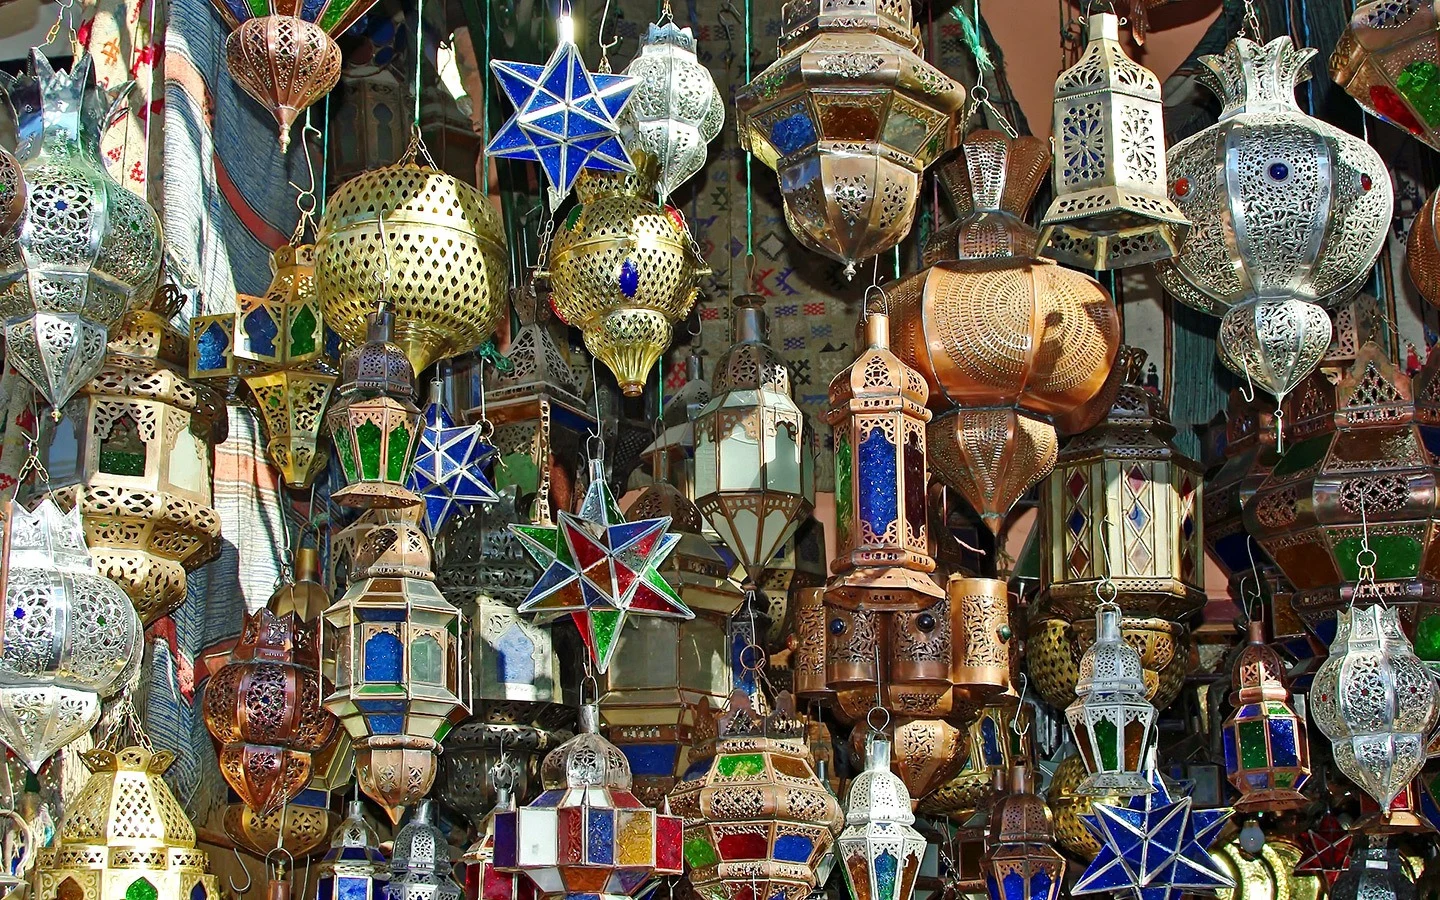 Lanterns in the souk, Marrakech